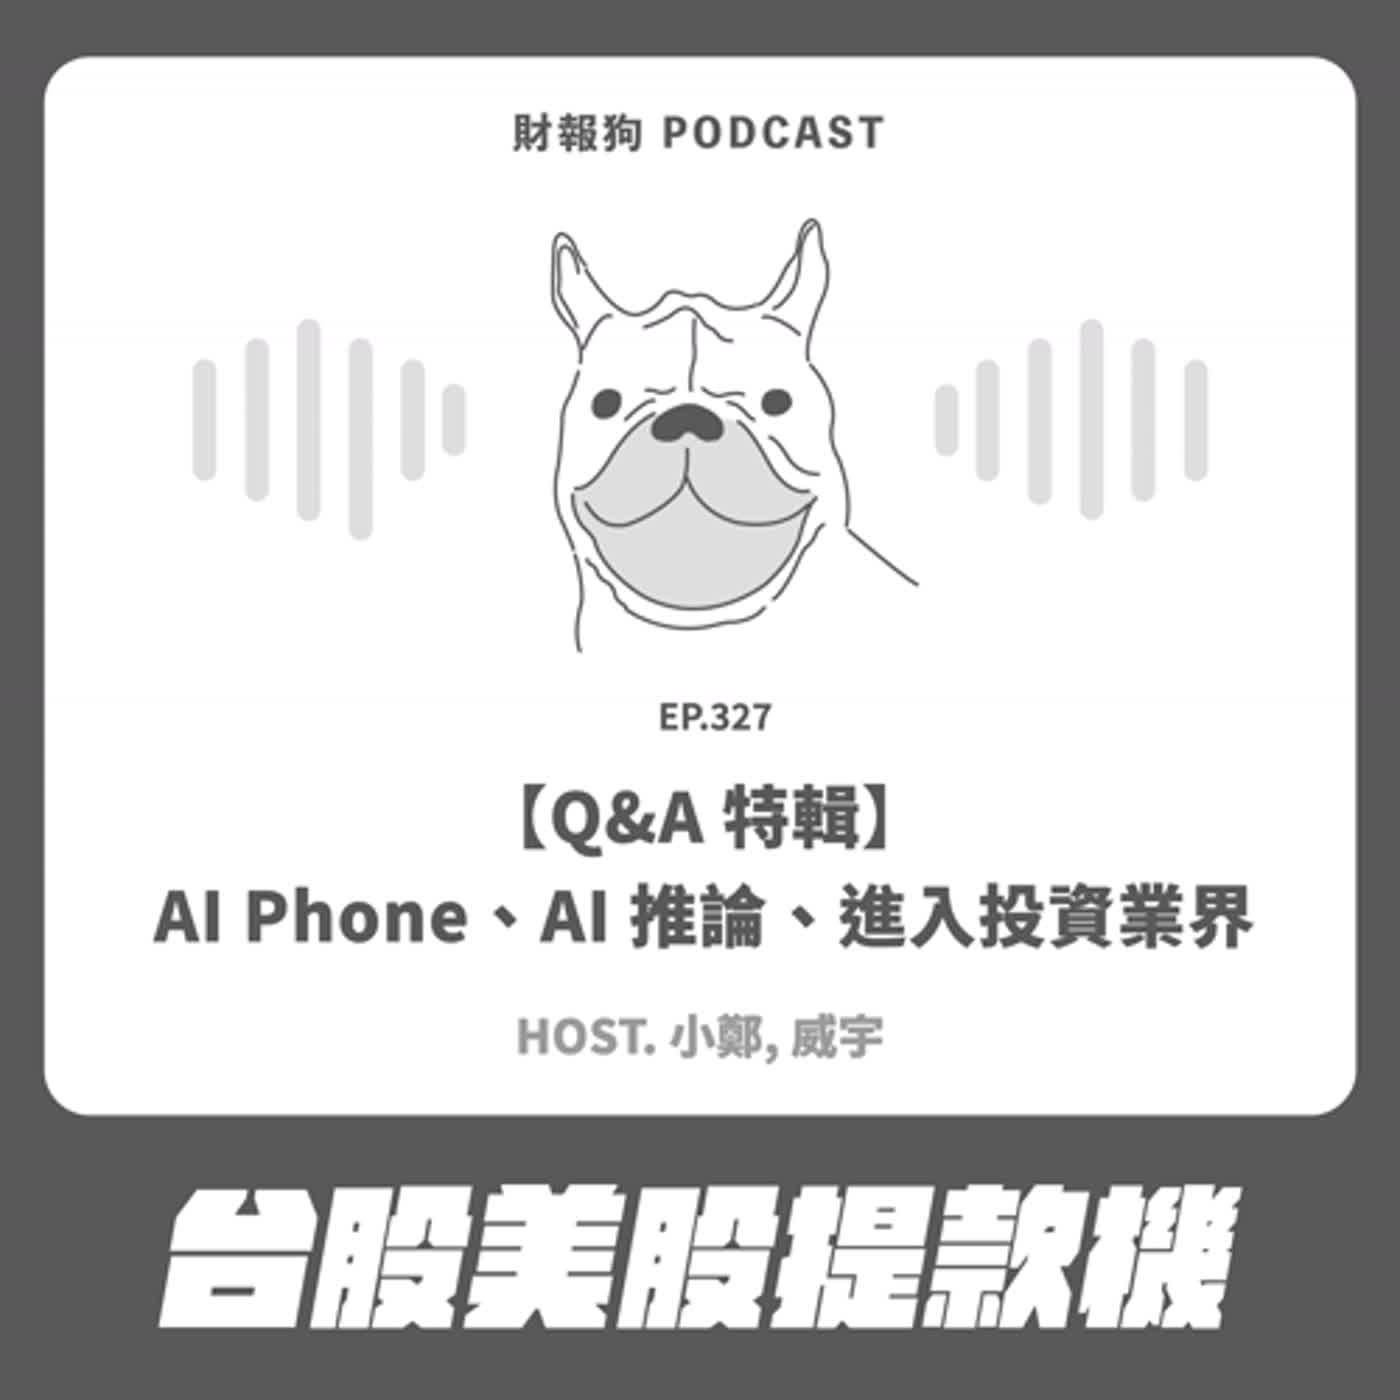 327.【Q&A 特輯】AI Phone、AI 推論、進入投資業界